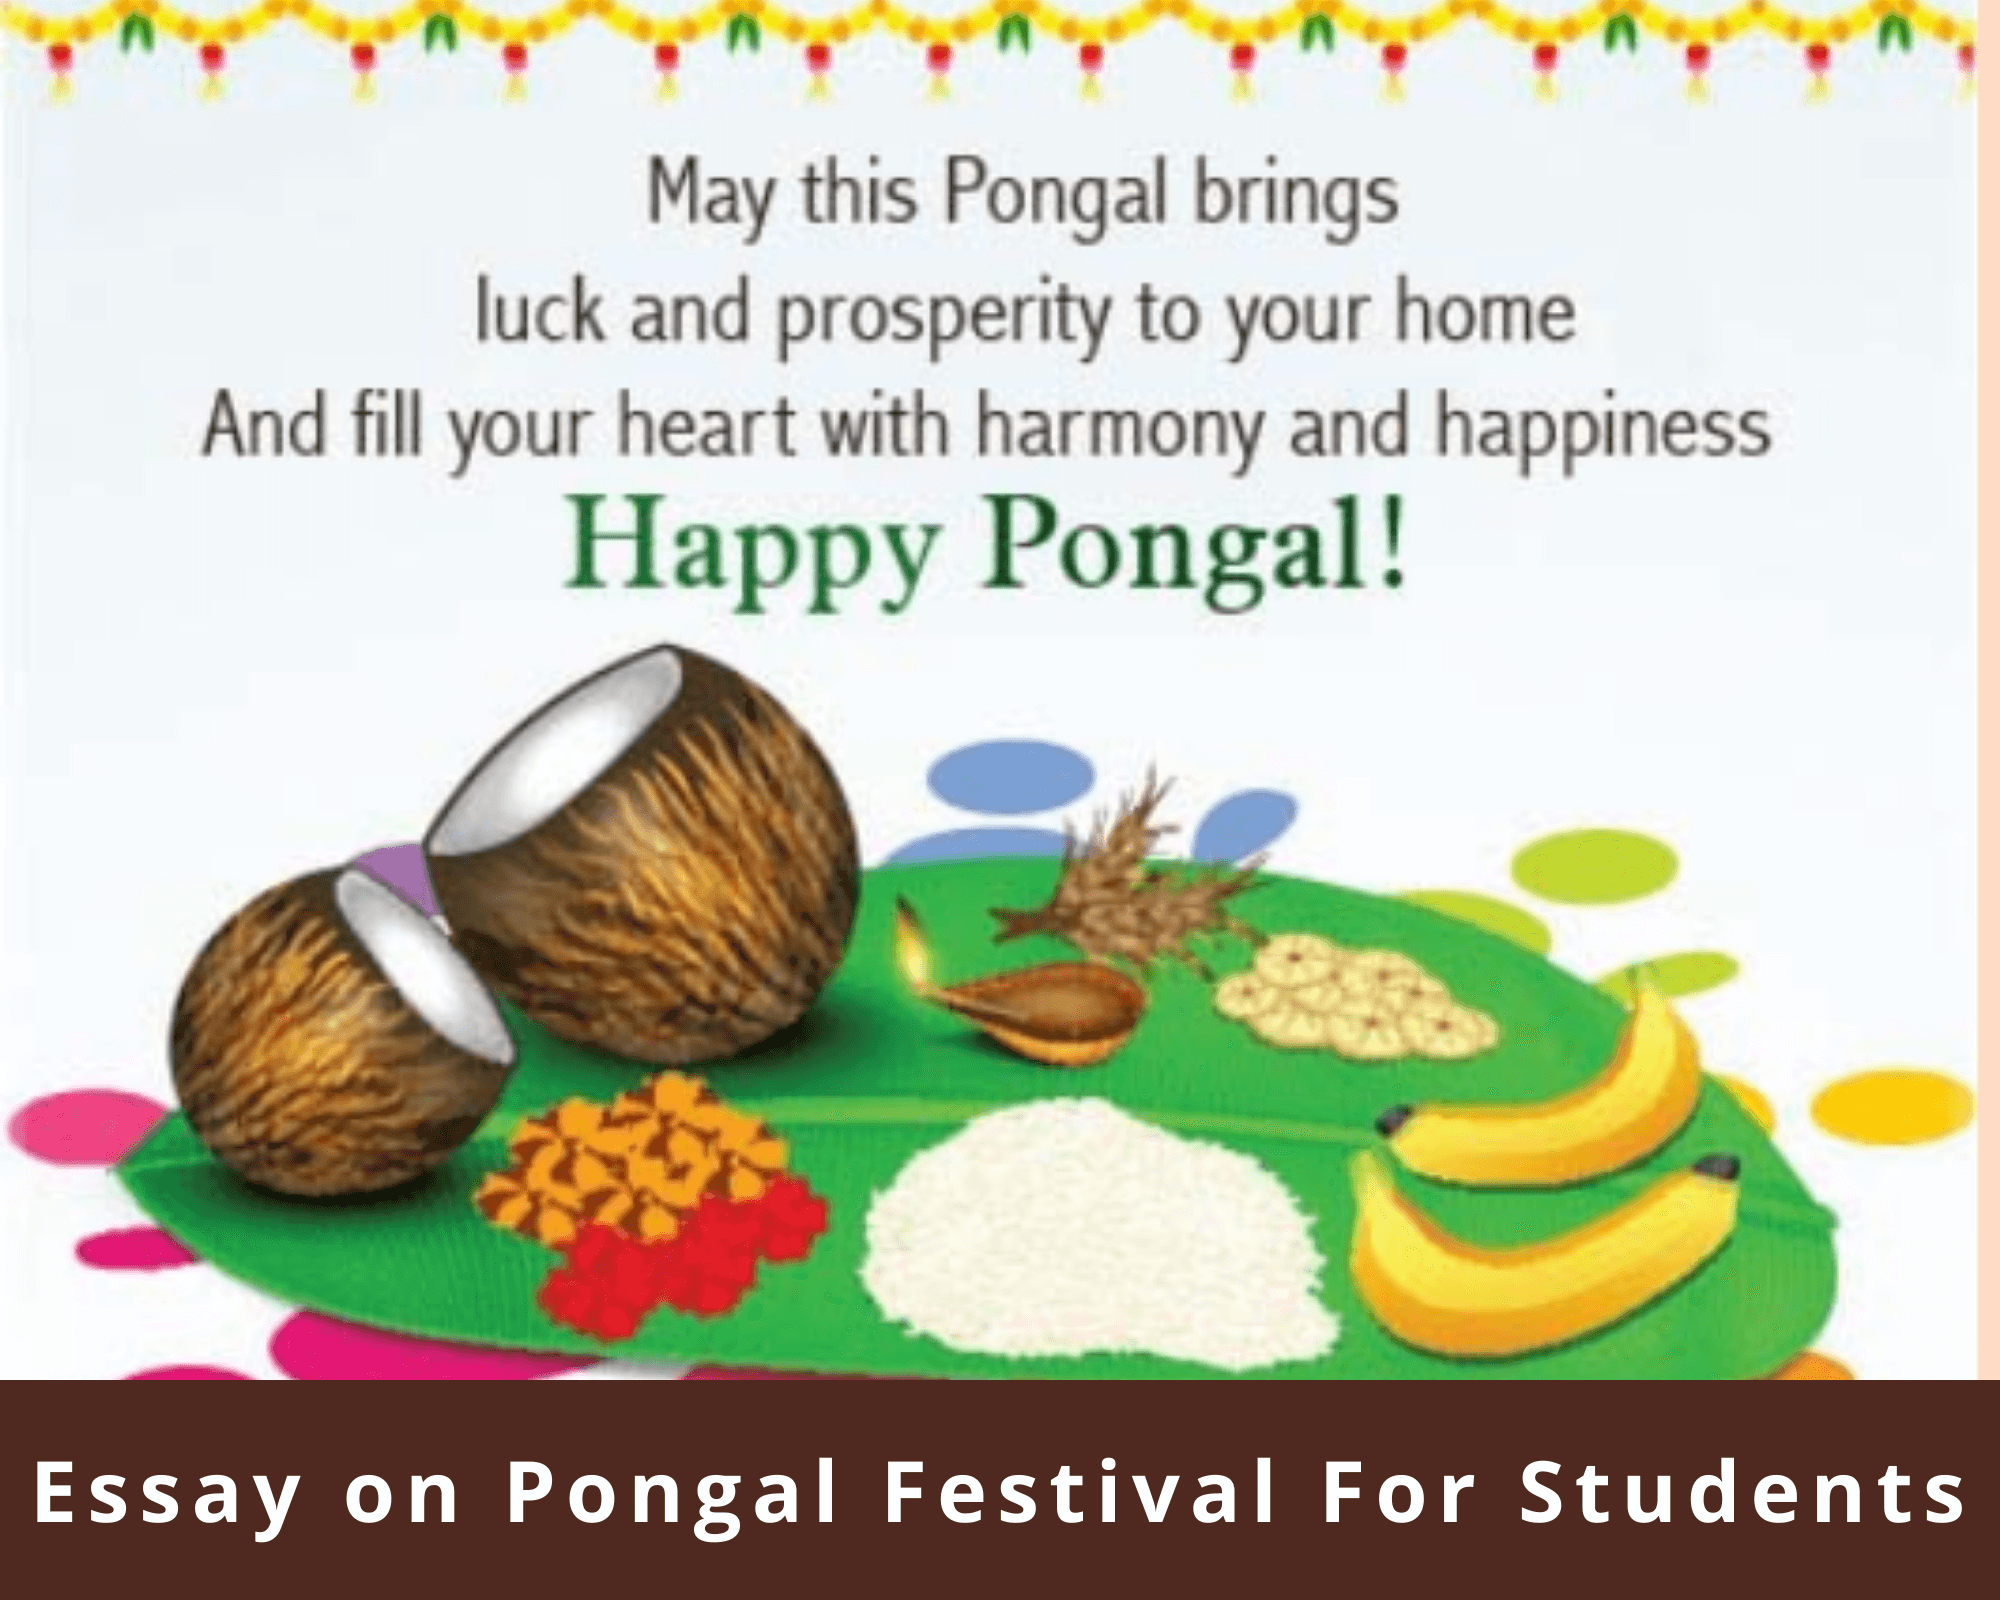 Essay on Pongal Festival